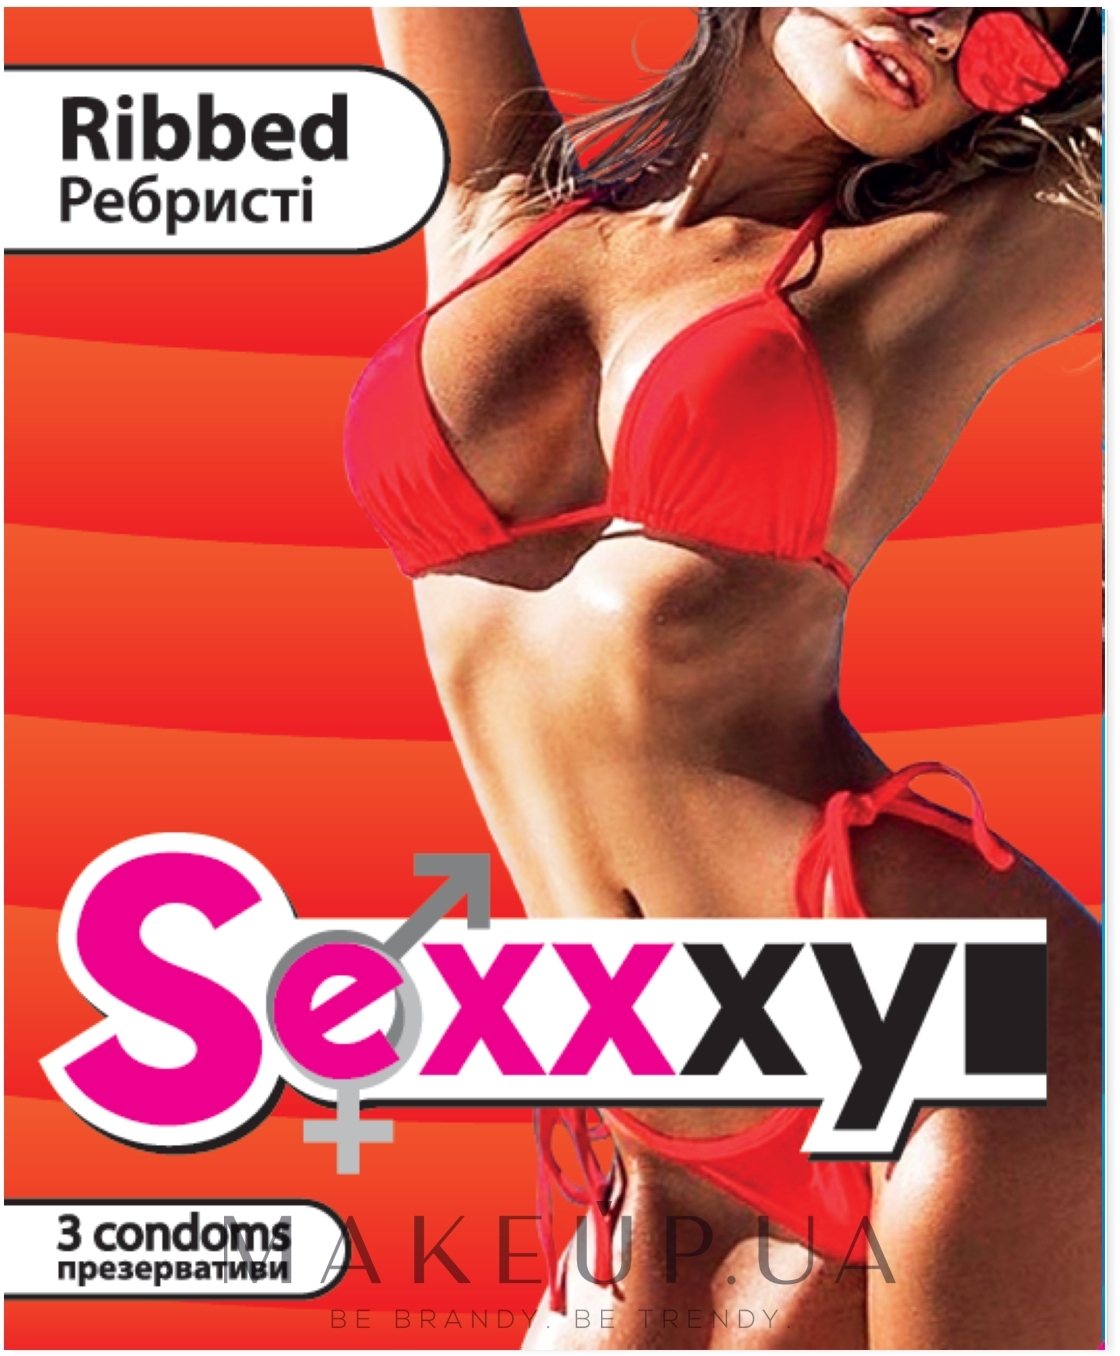 Презервативы "Ribbed" - Sexxxyi — фото 3шт